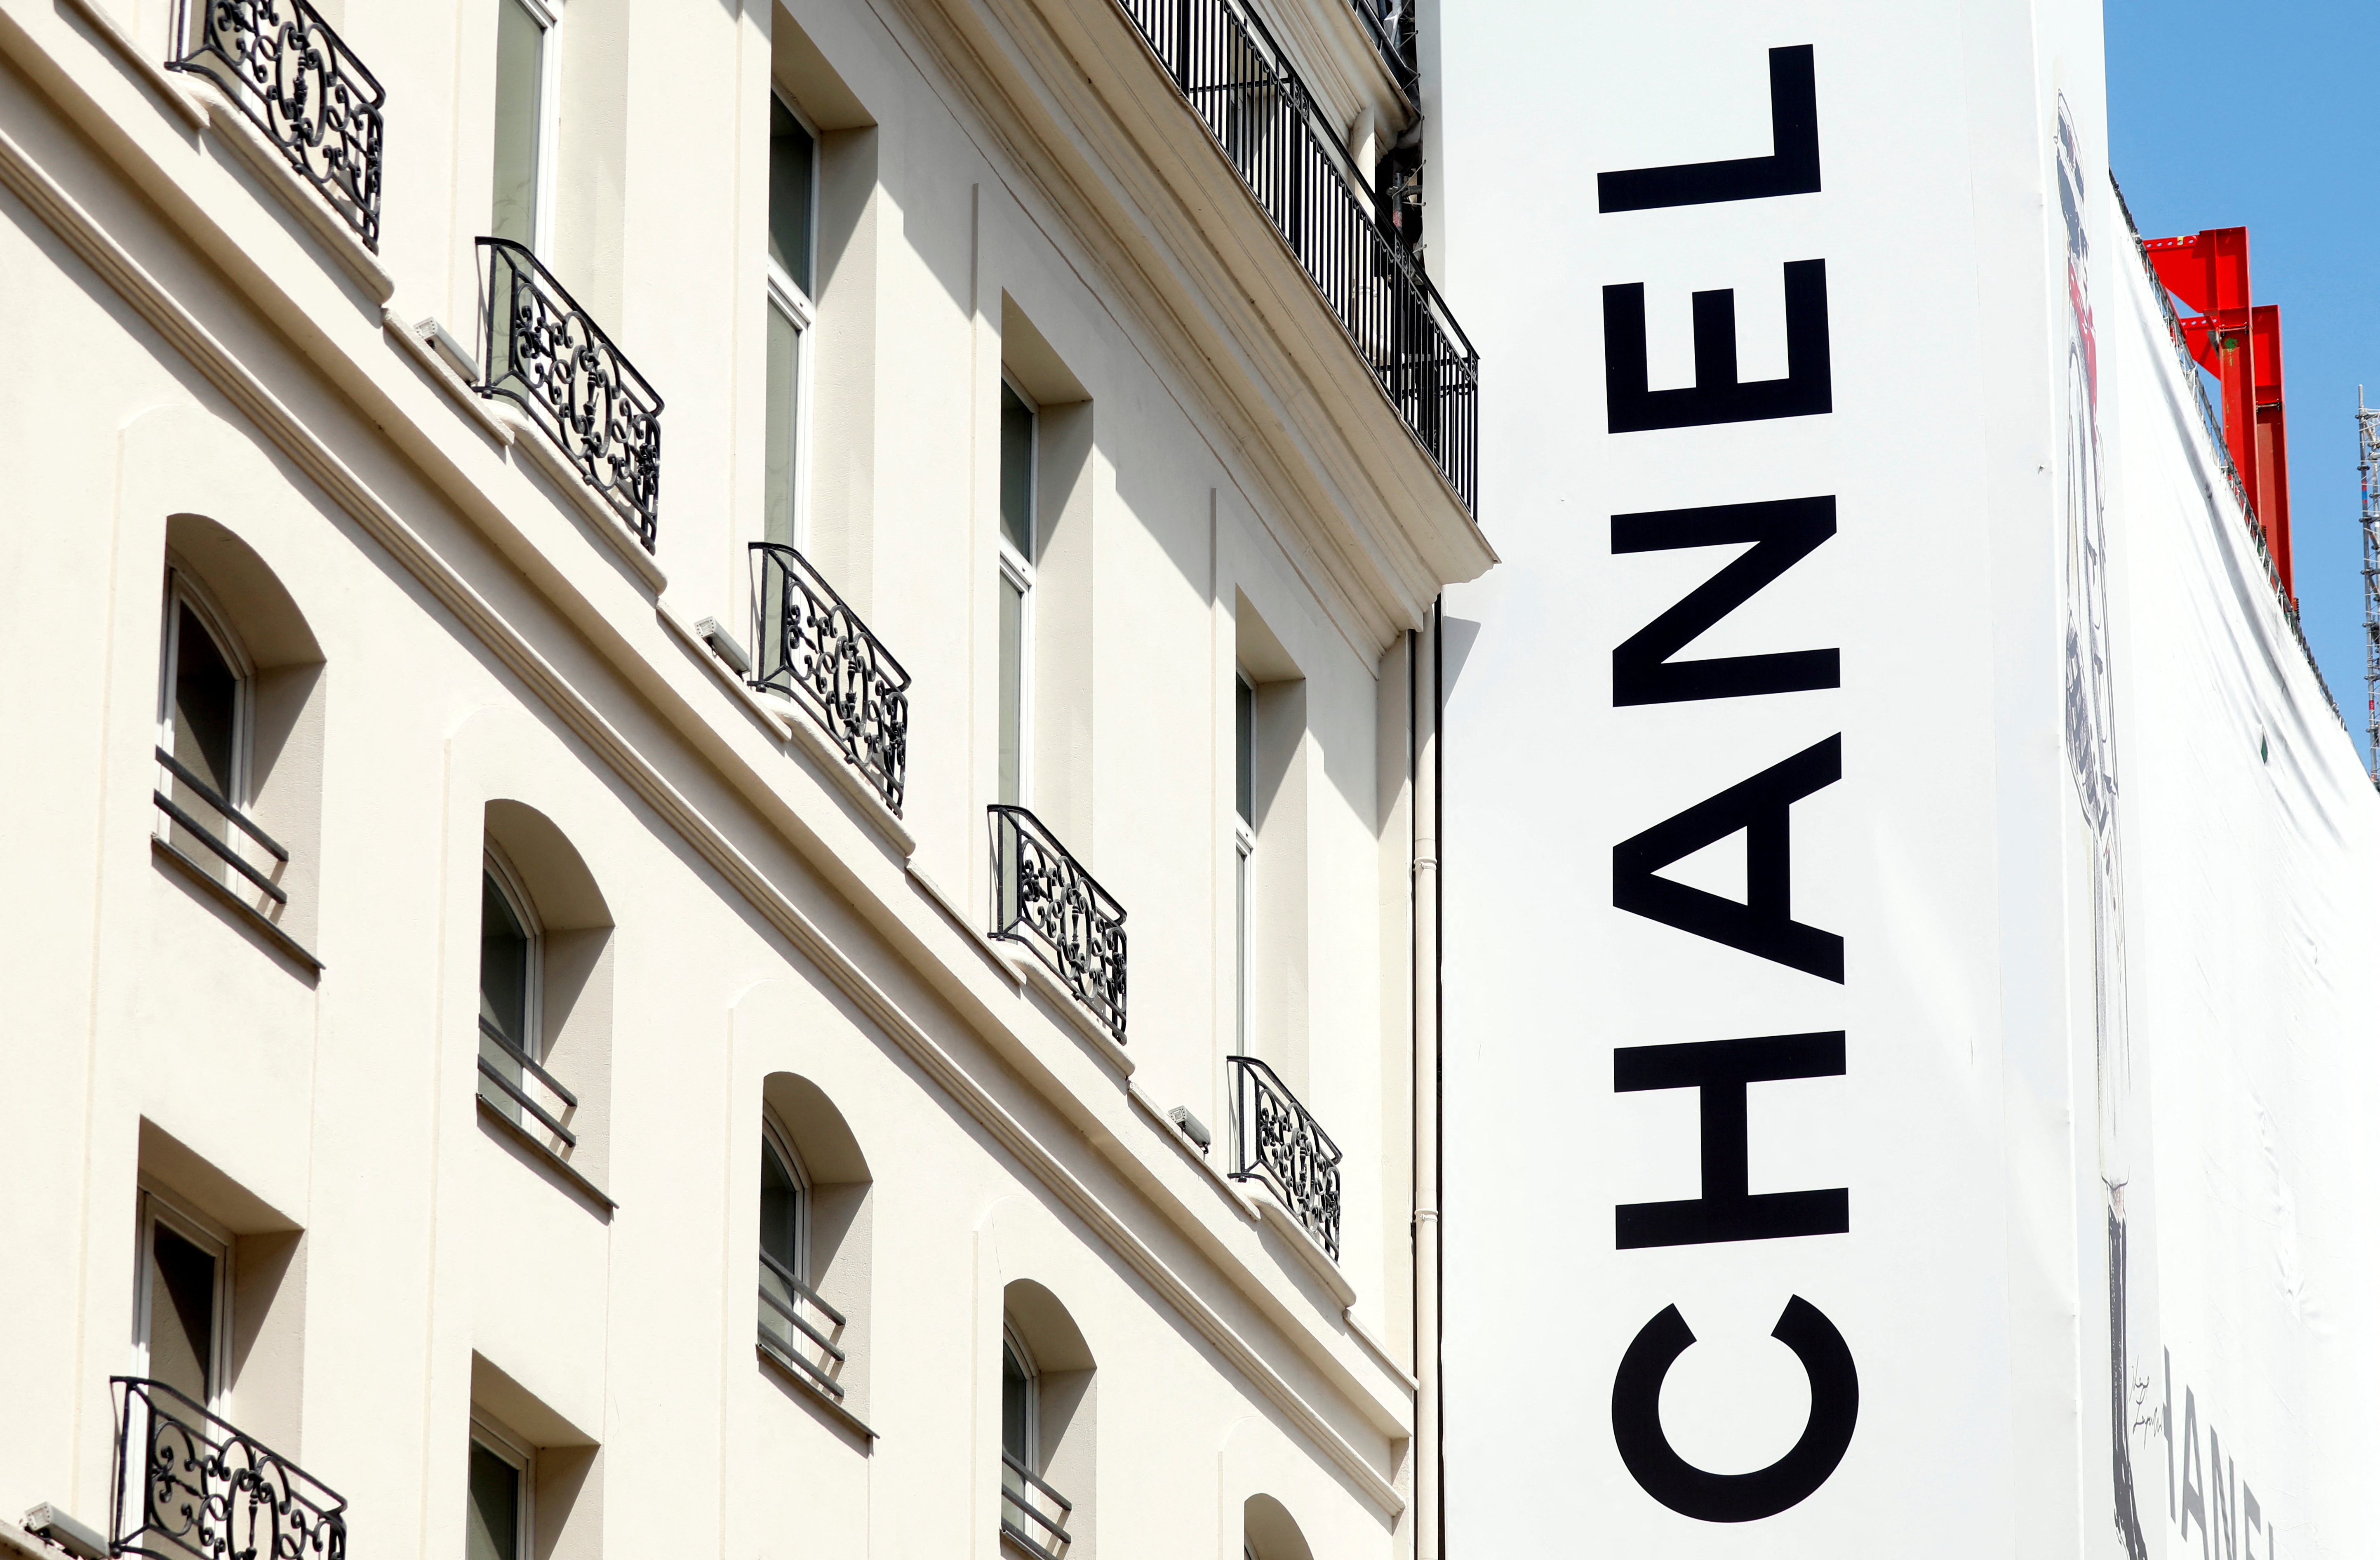 Chanel flags weaker U.S. sales, sees pickup in China